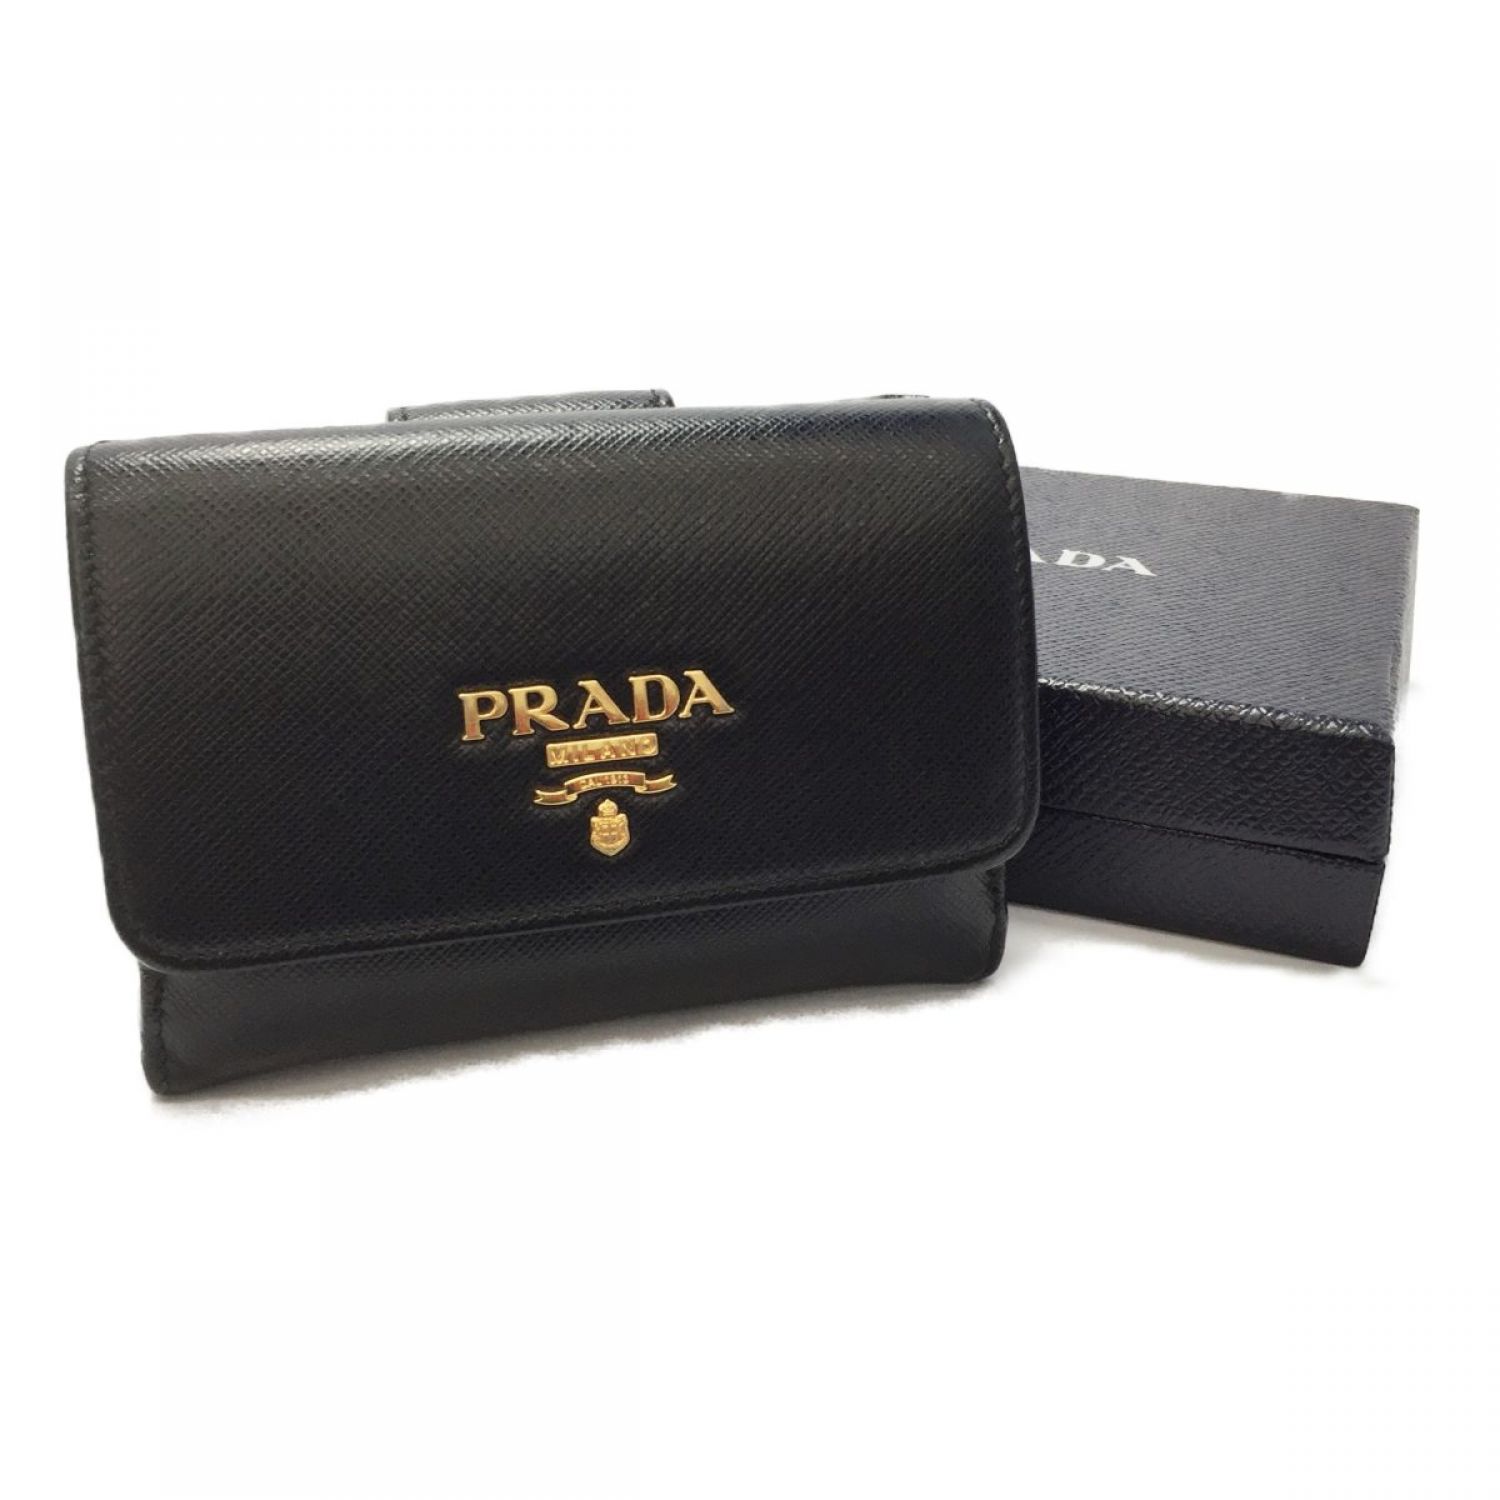 PRADA プラダ 1MH523 三つ折り財布 サフィアーノ ピンクブランド財布